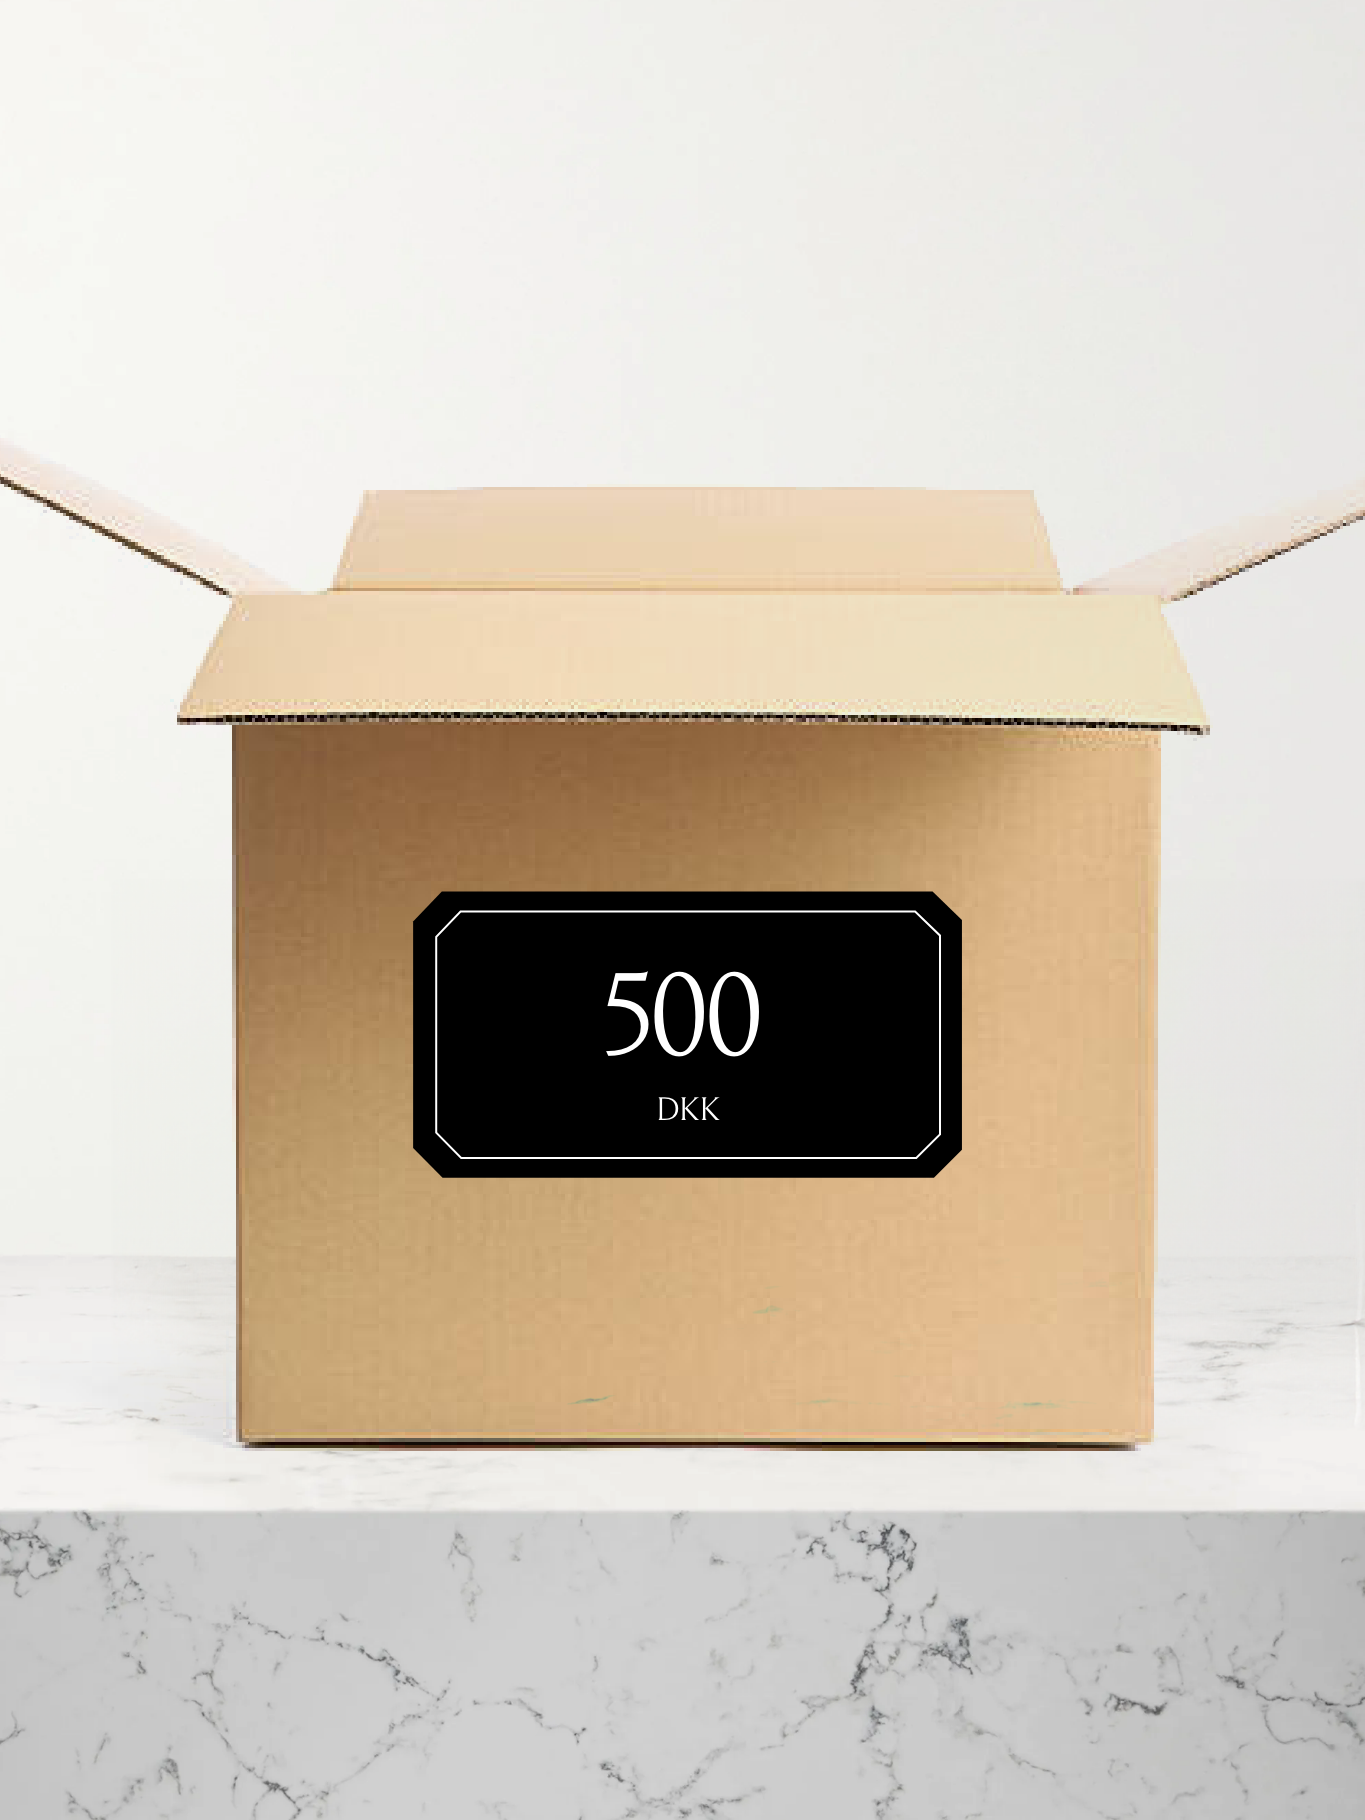 MYSTERY BOX FOR 500 DKK